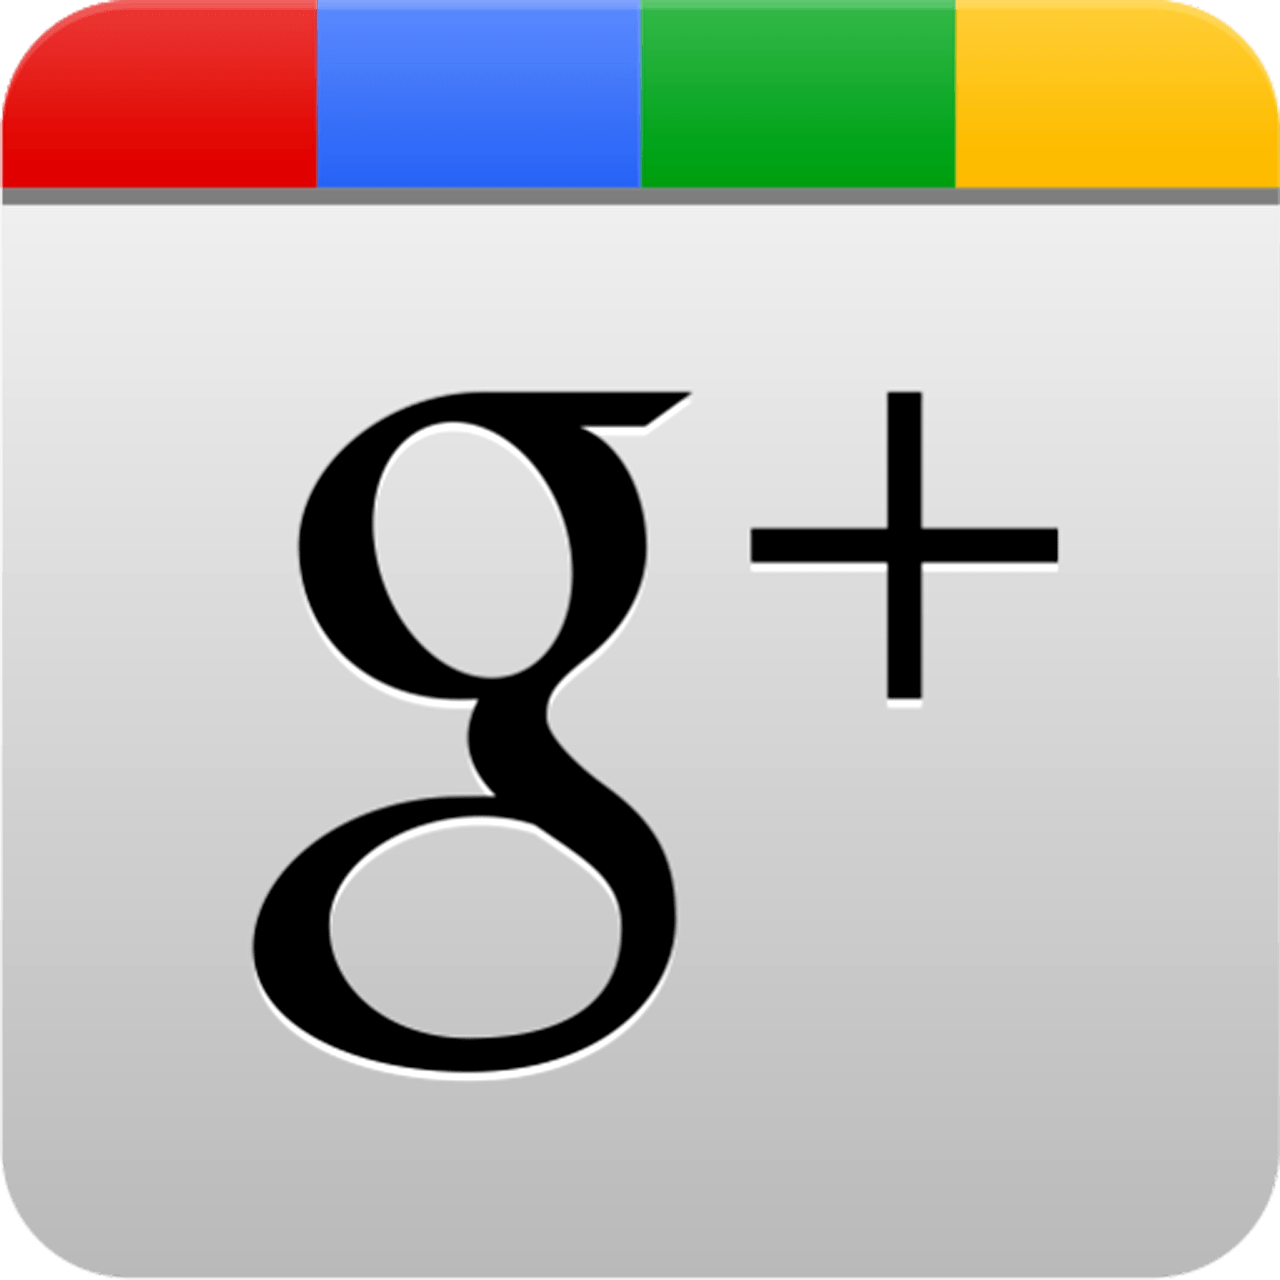 Google Plus Logo - Google Plus Logo Grey White HD Wallpaper #1259 - Free Icons and PNG ...